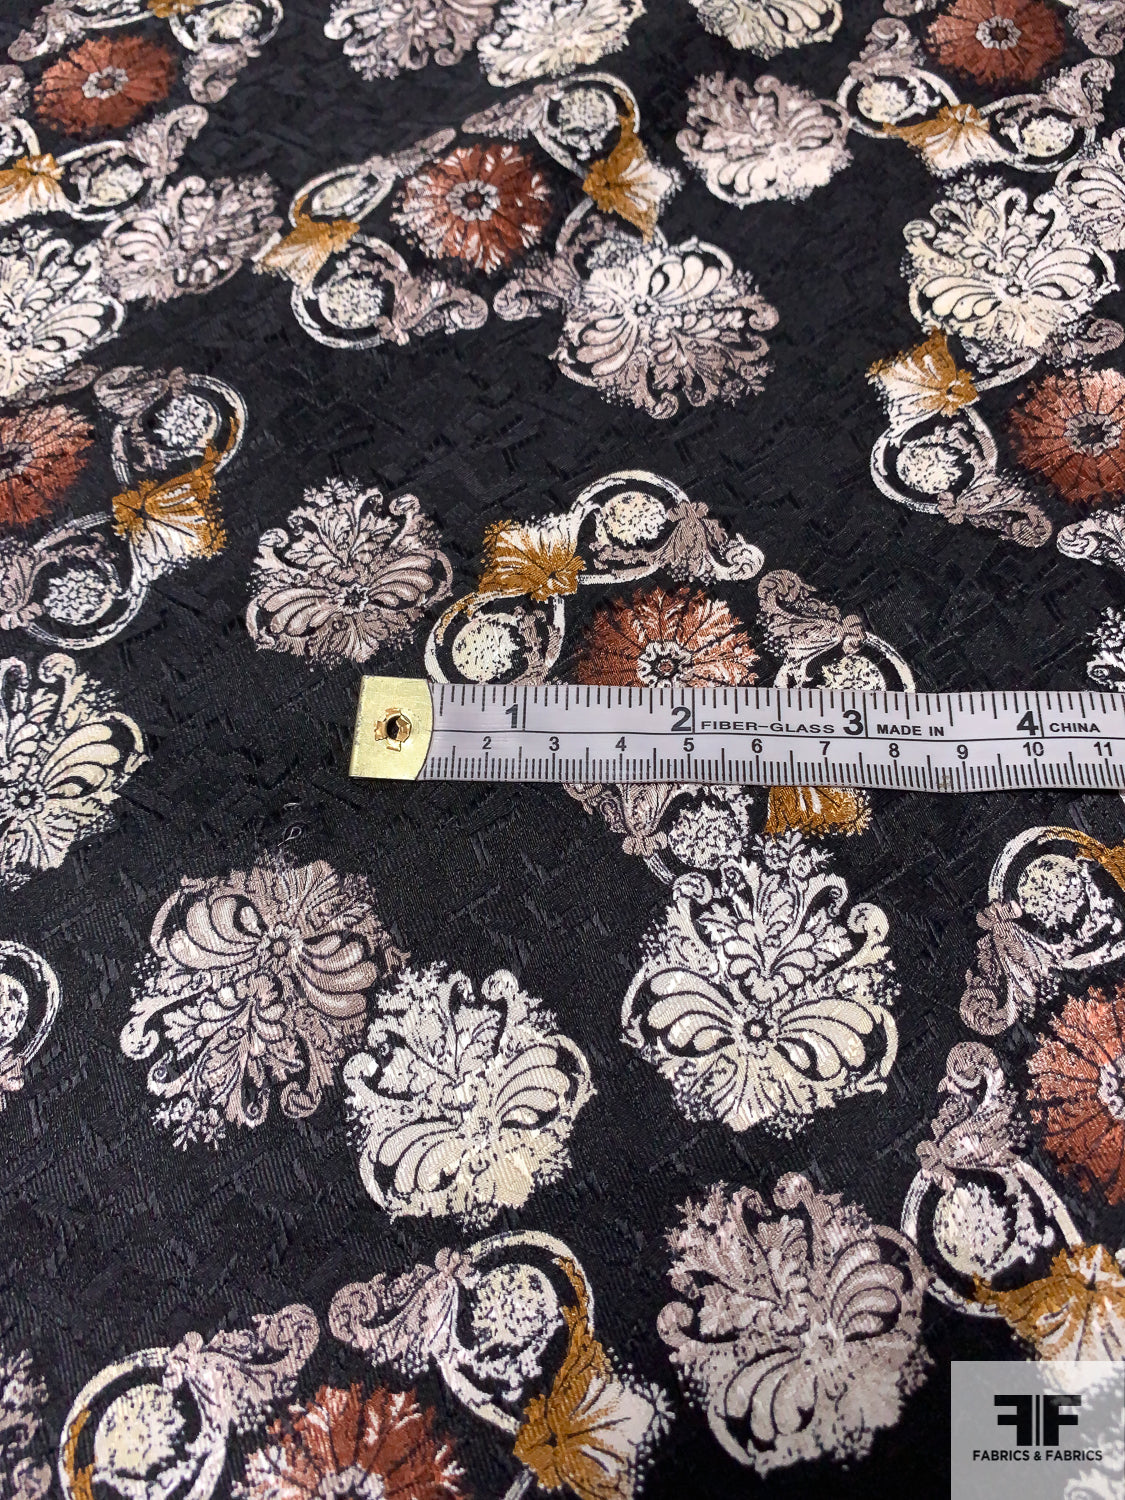 Ornate Floral Printed Vintage Silk Jacquard - Black / Brown / Antique Mustard / Off-White